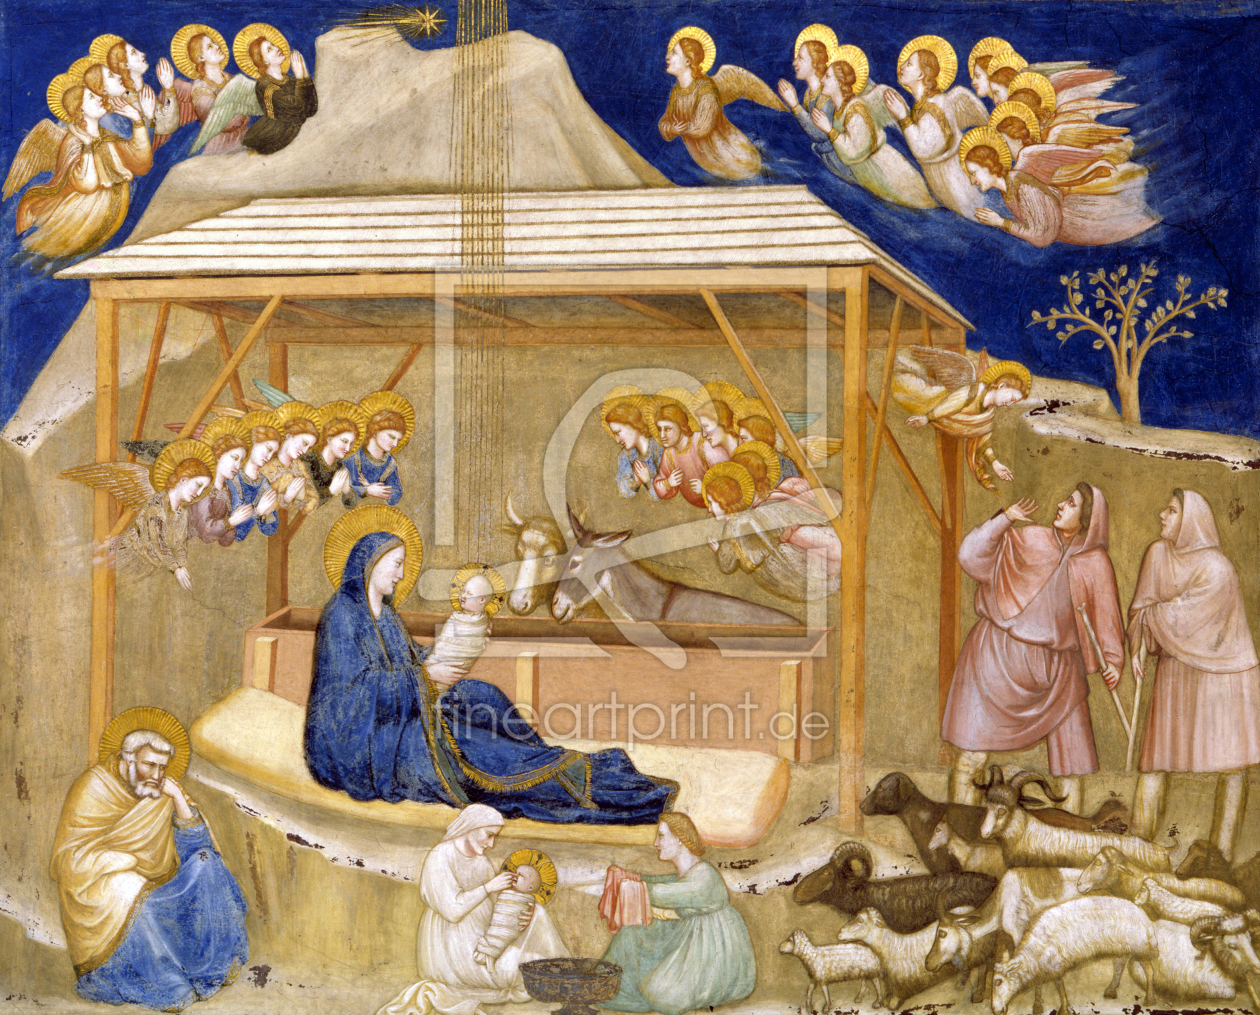 Bild-Nr.: 30001886 Birth of Christ / Fresco / c.1315/20 erstellt von Giotto di Bondone